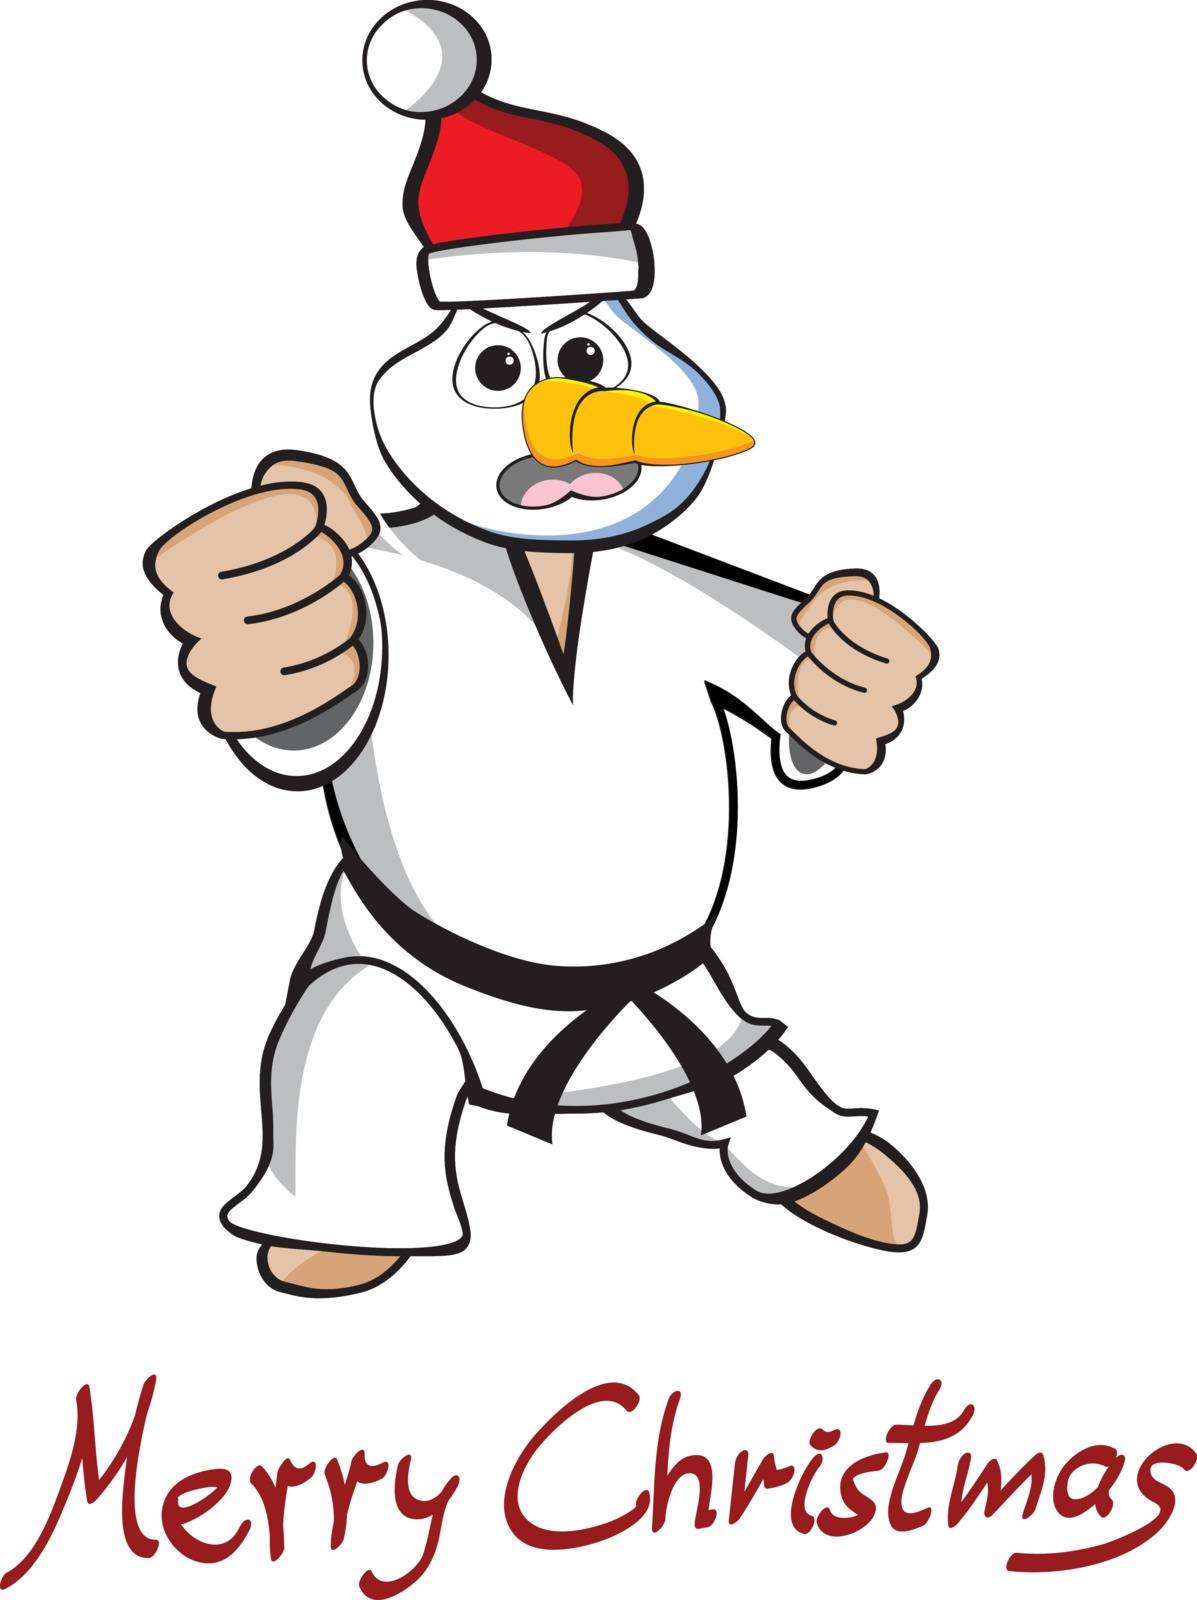 Illustration of an martial arts Taekwondo snowman with text Merry Christmas